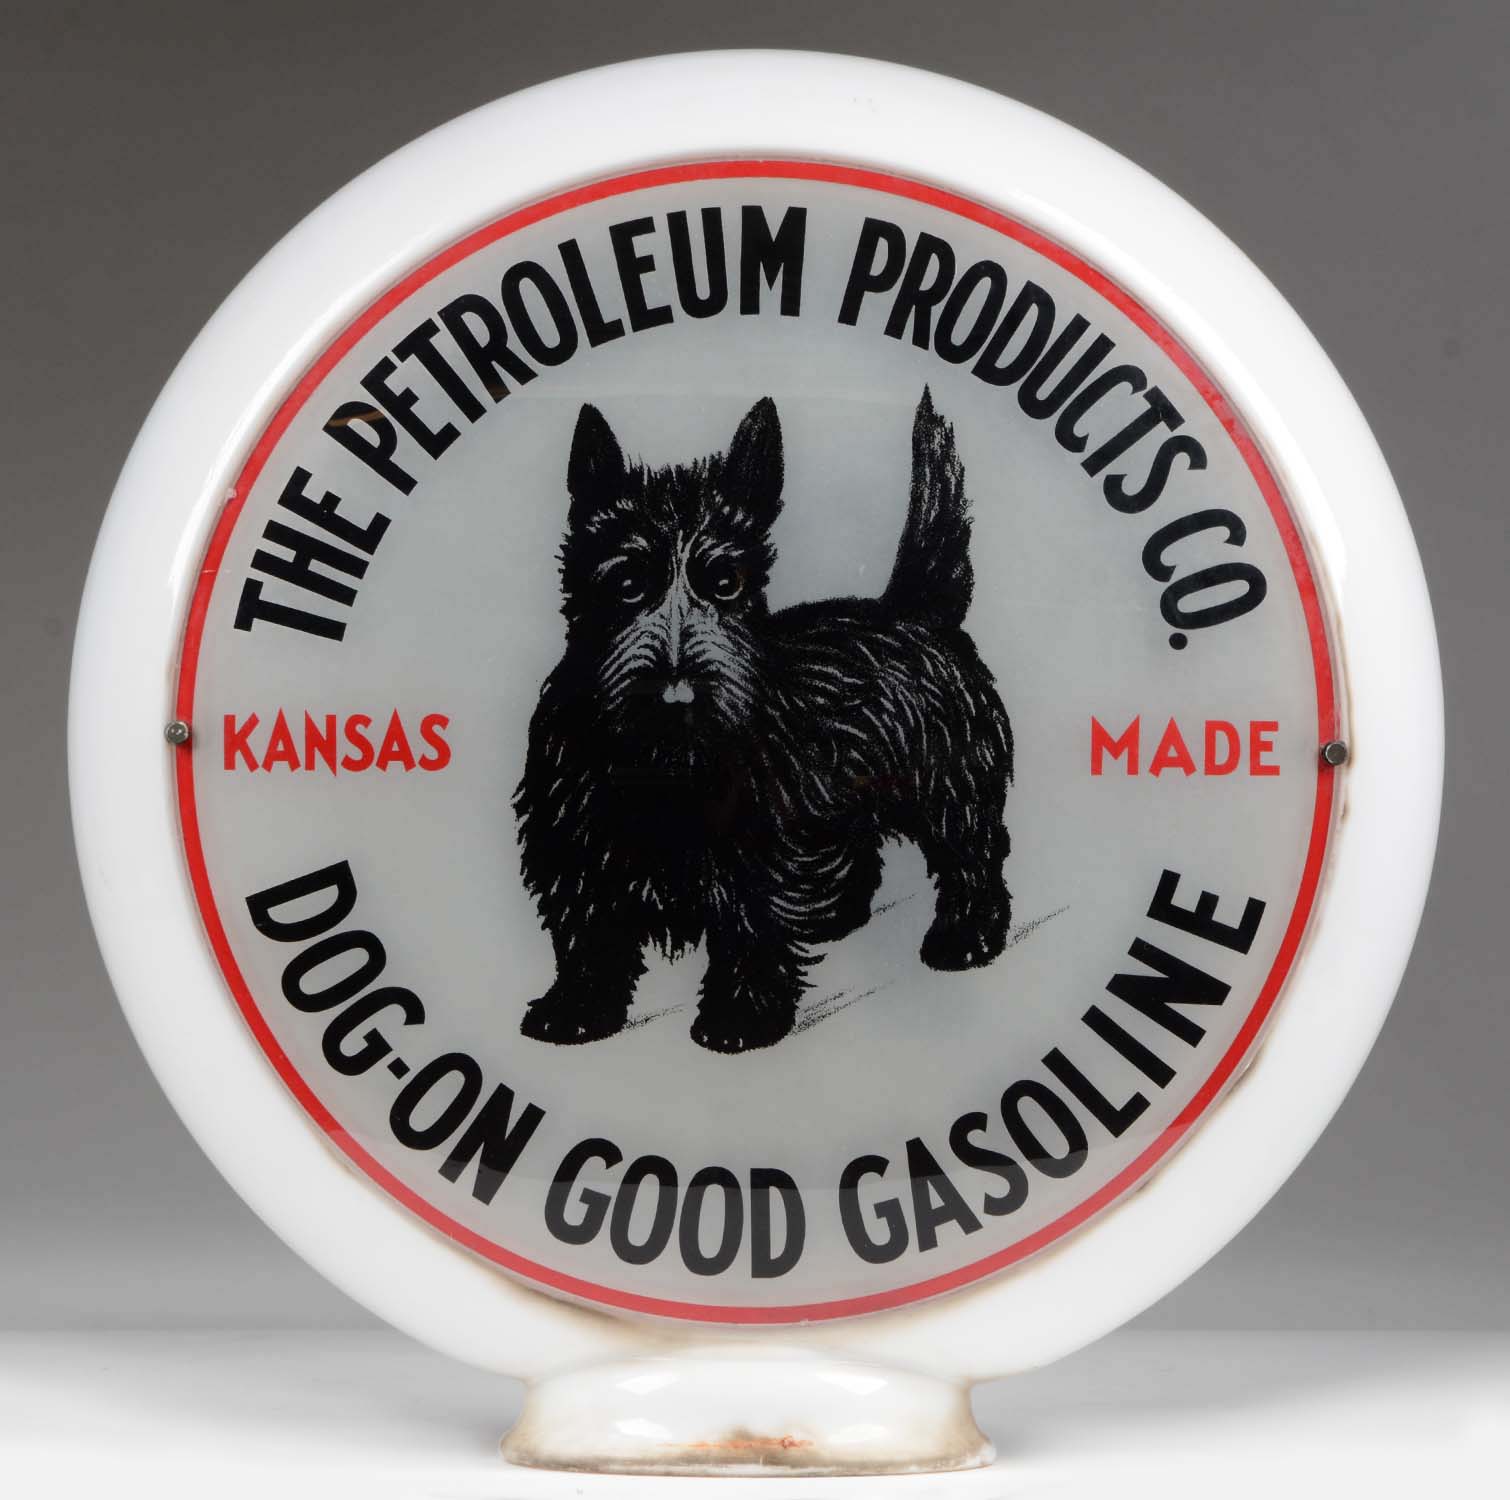 The Petroleum Products Co. Kansas Made Dog on Good Gasoline Globe, estimated at $12,000-20,000.